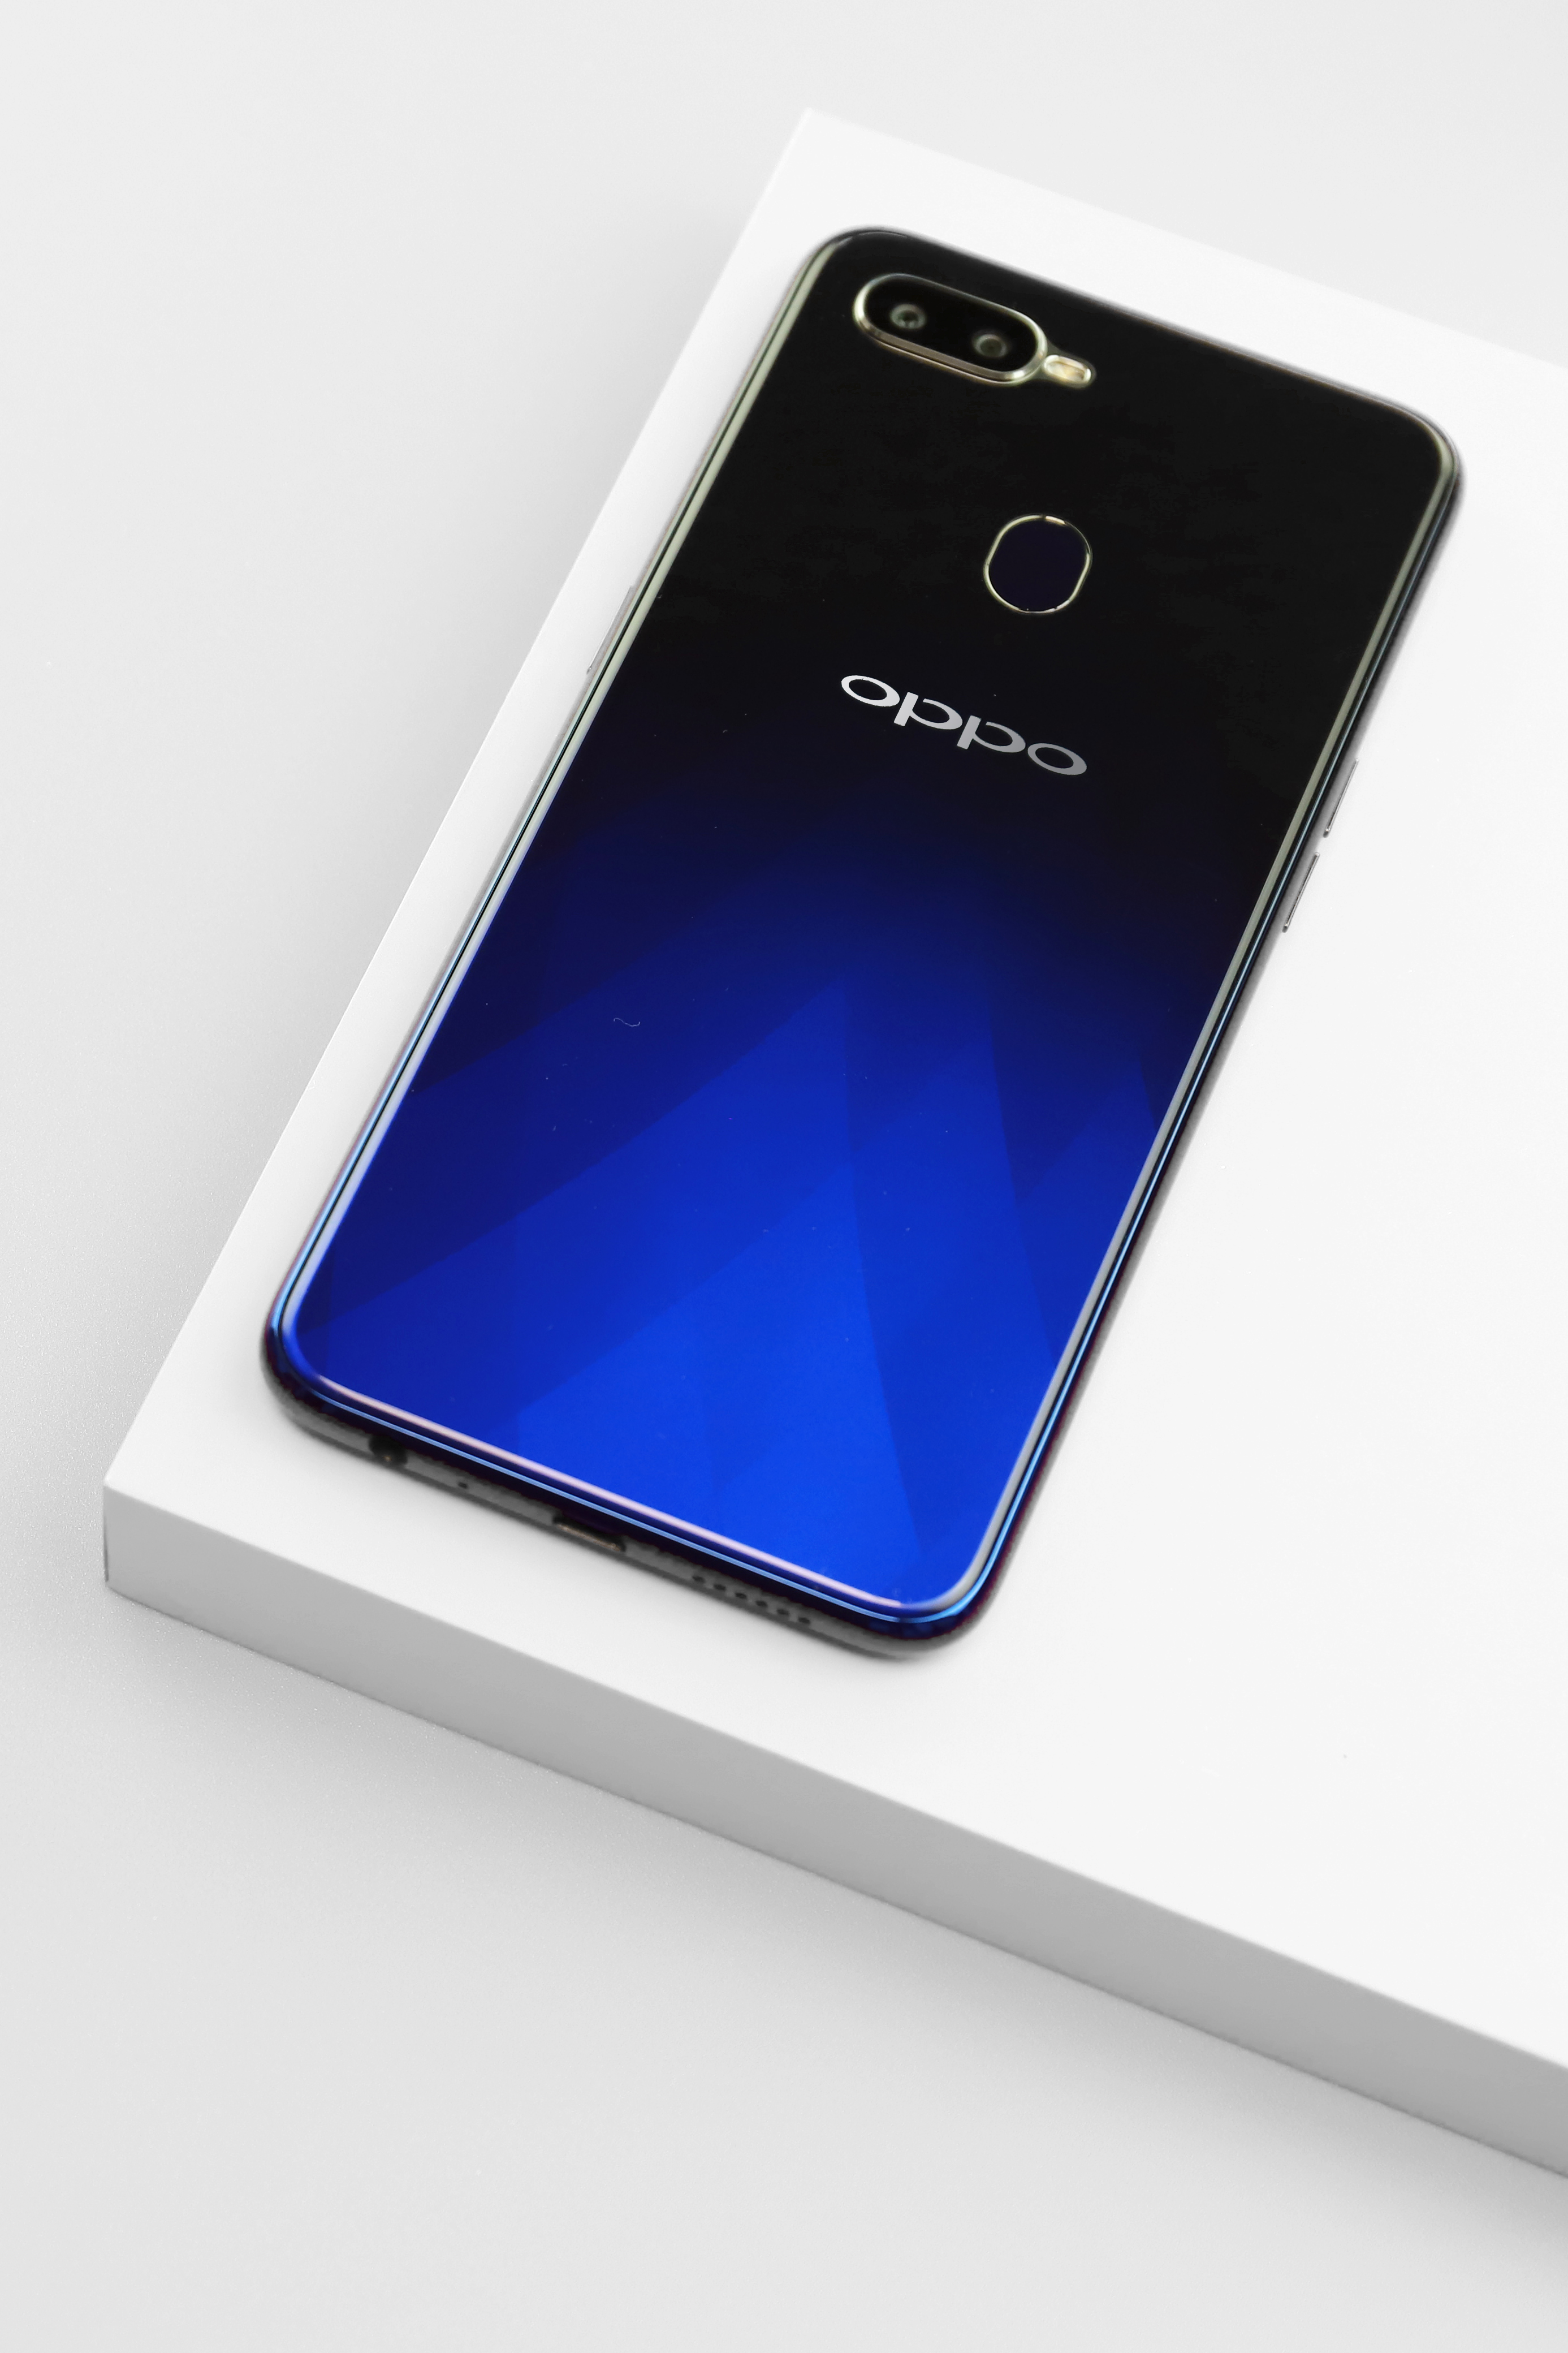 oppoa7x手机多少钱一部（oppoa7x手机参数和价格）